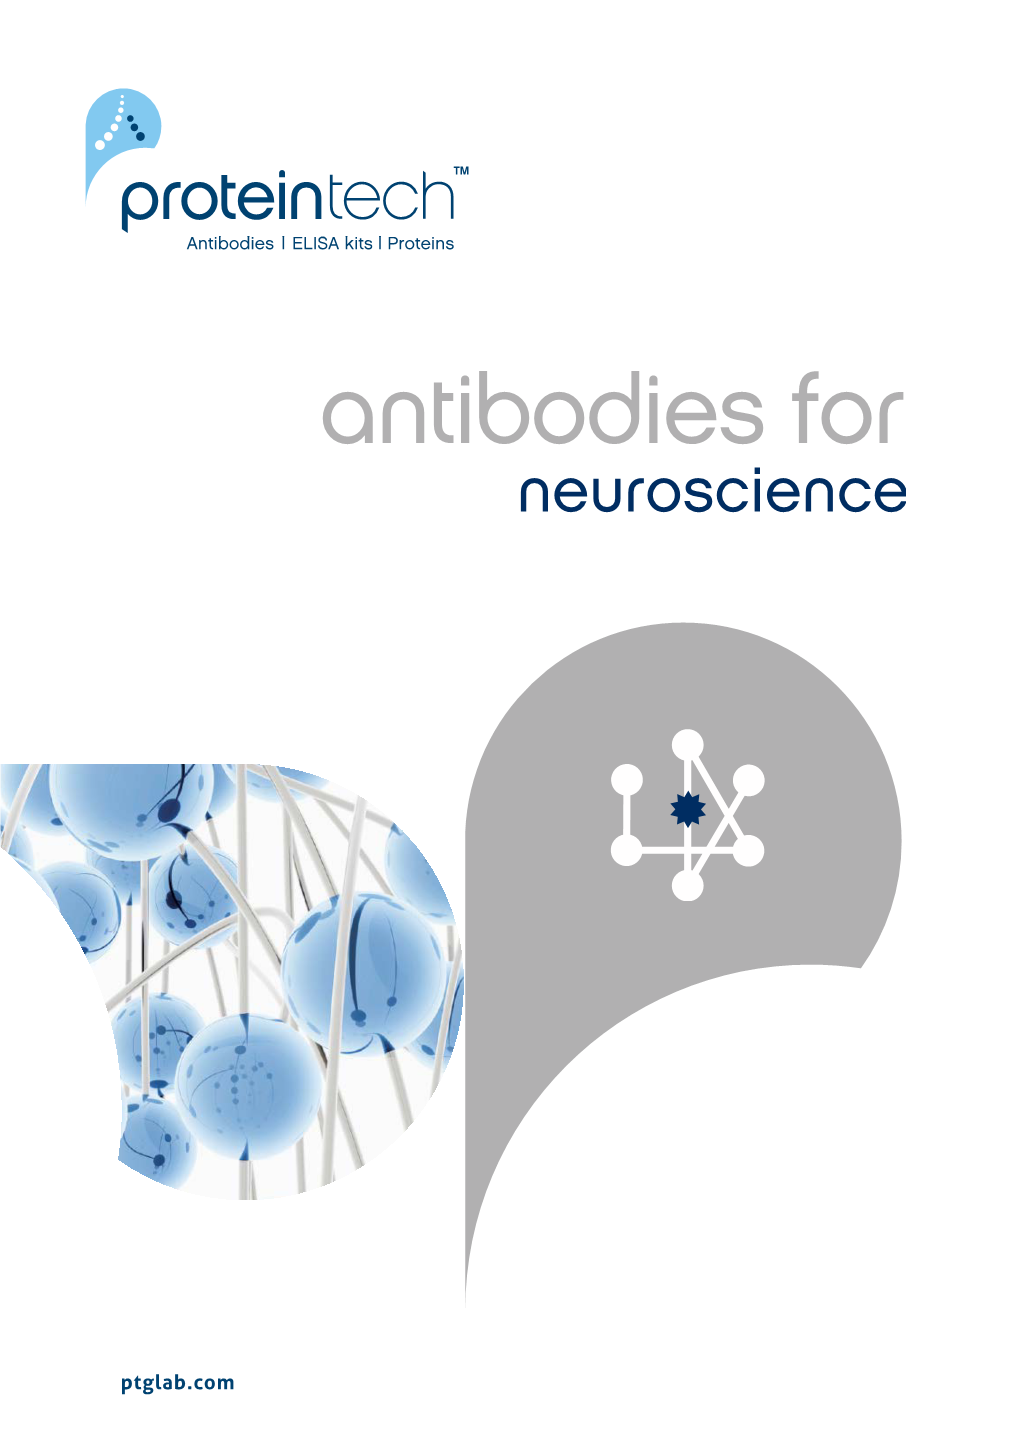 Antibodieseses F F Orforor Neuroscience Neurneoscieuroscienncece